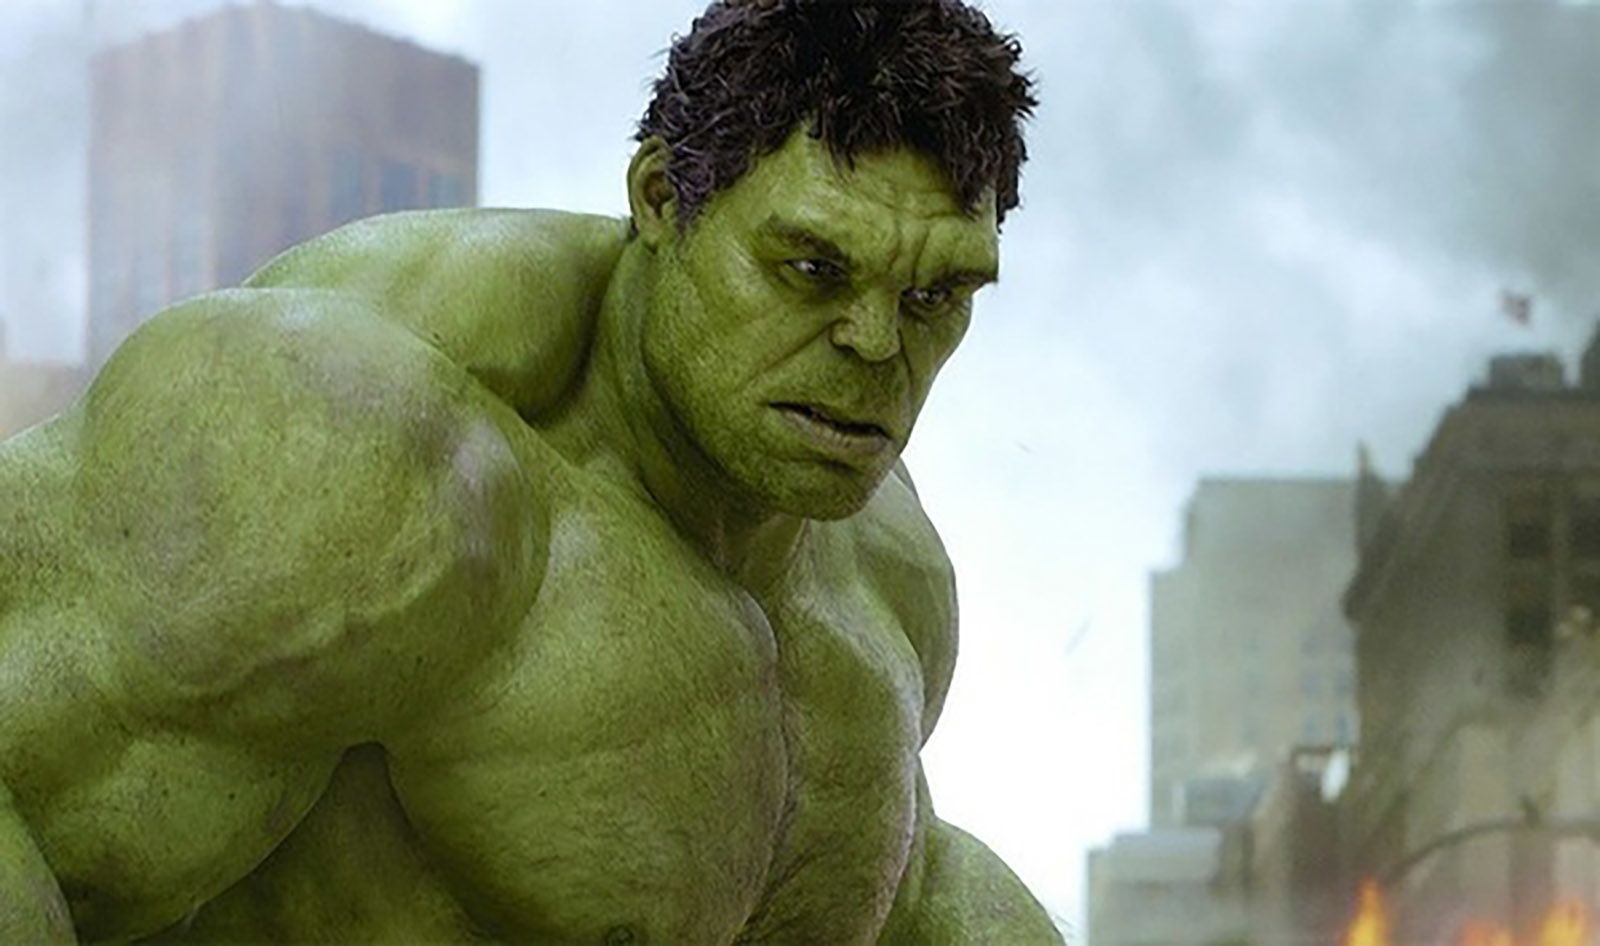 Mark Ruffalo turns into the Hulk in The Avengers